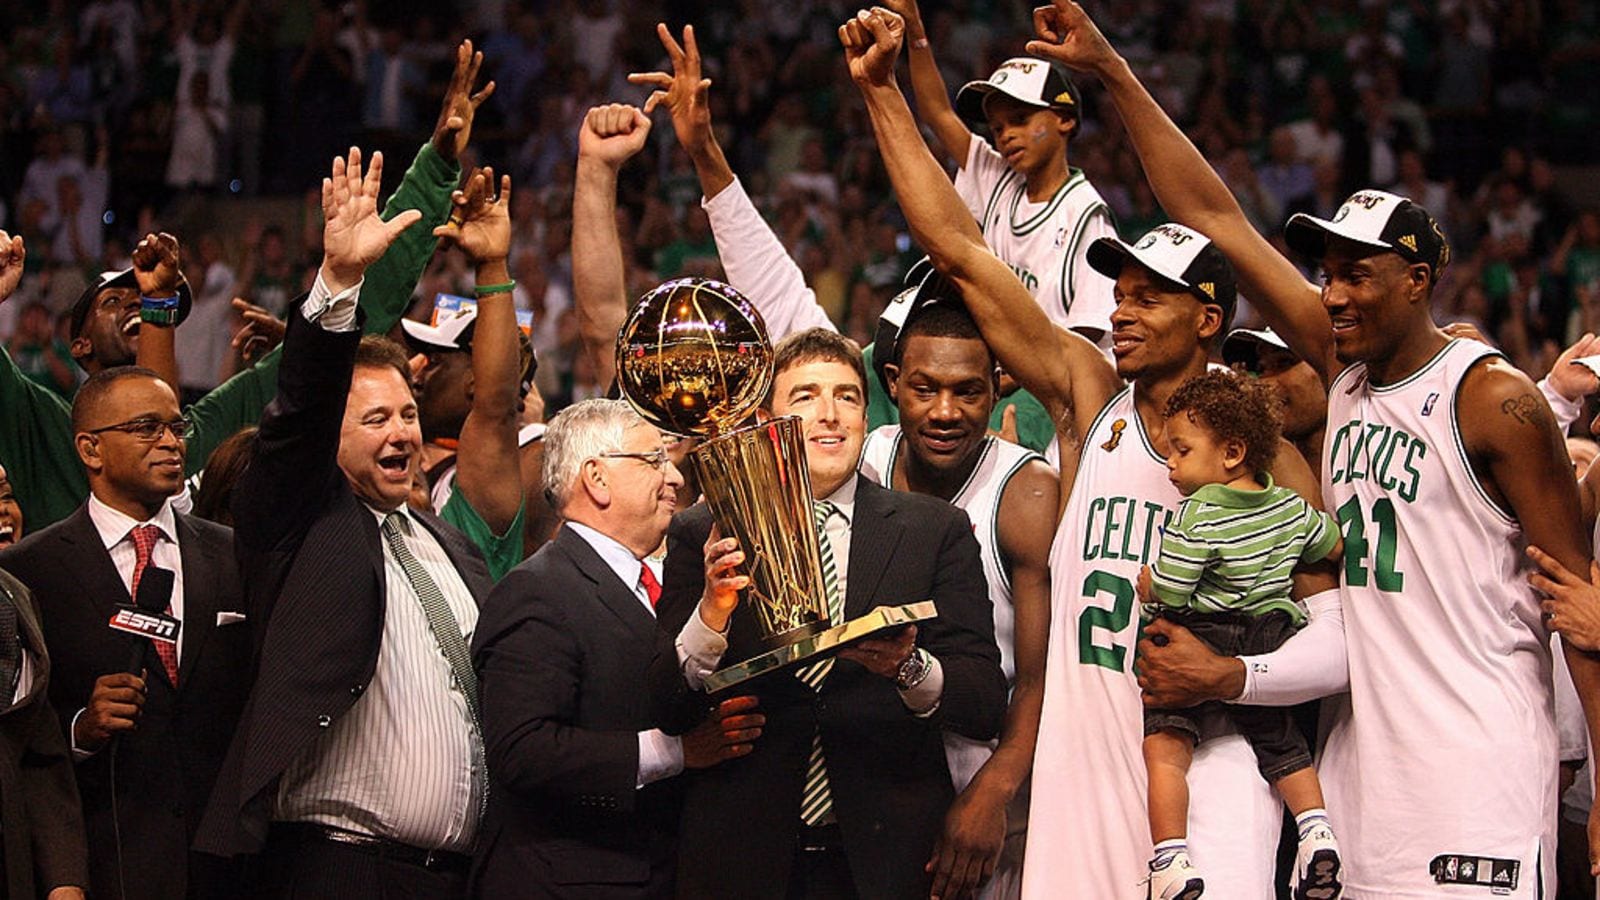 2008 NBA Finals featuring the Champion Celtics